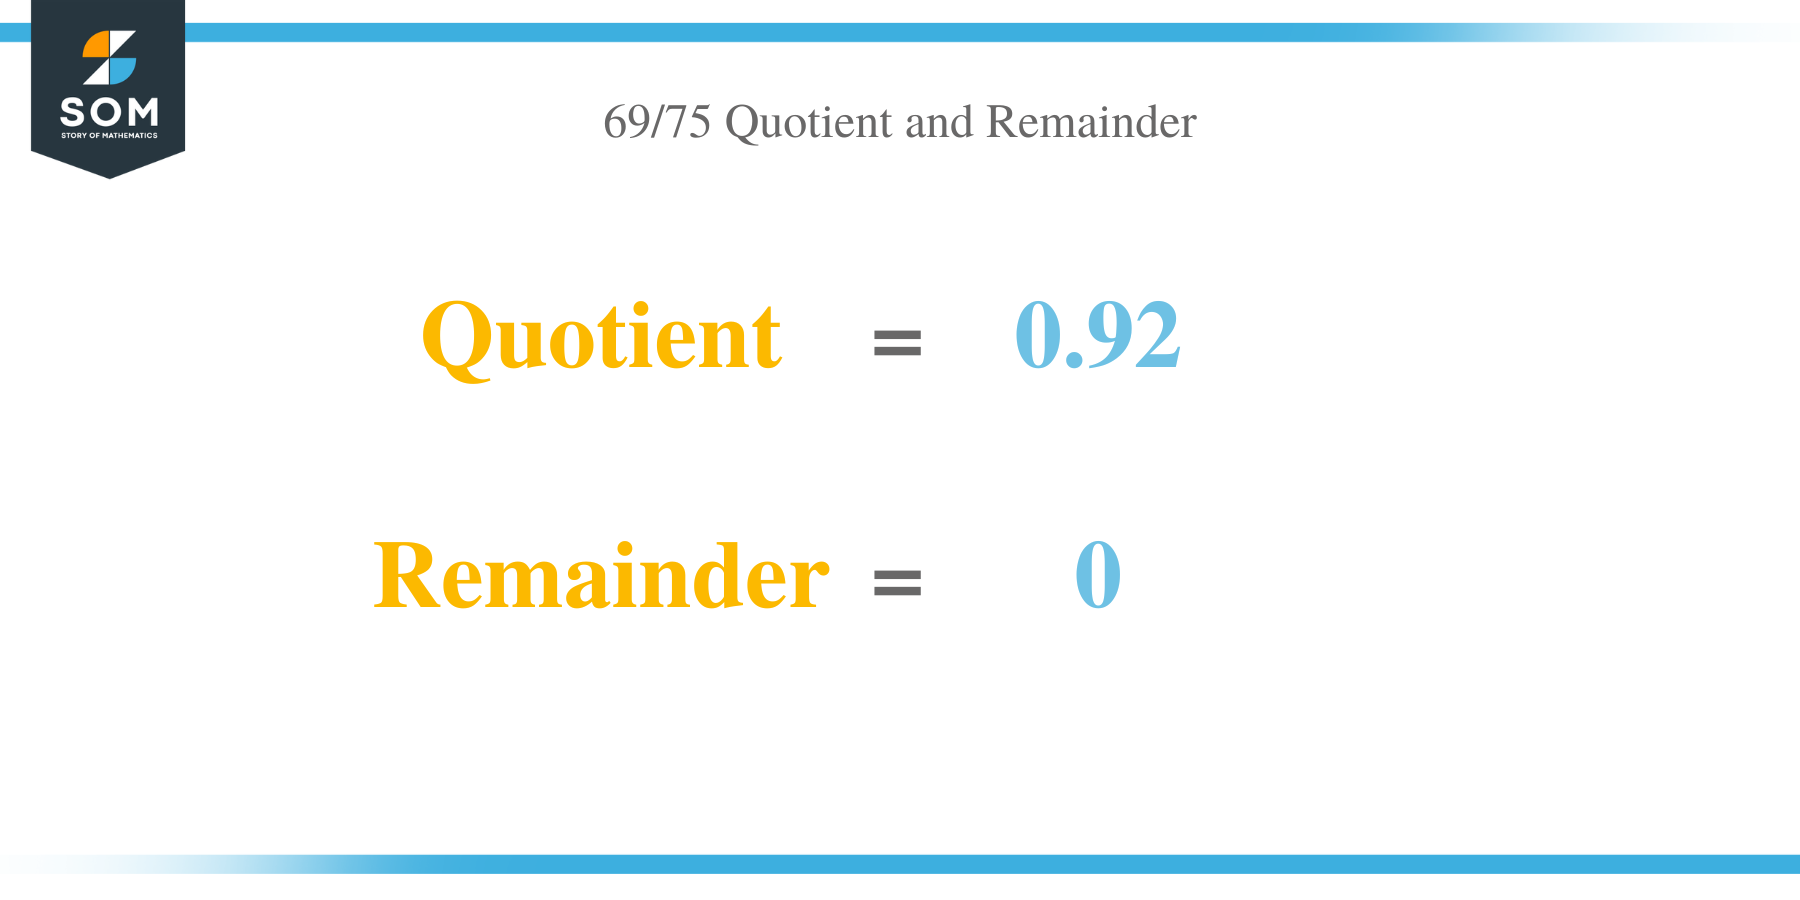 Quotient and Remainder of 95 69 per 75